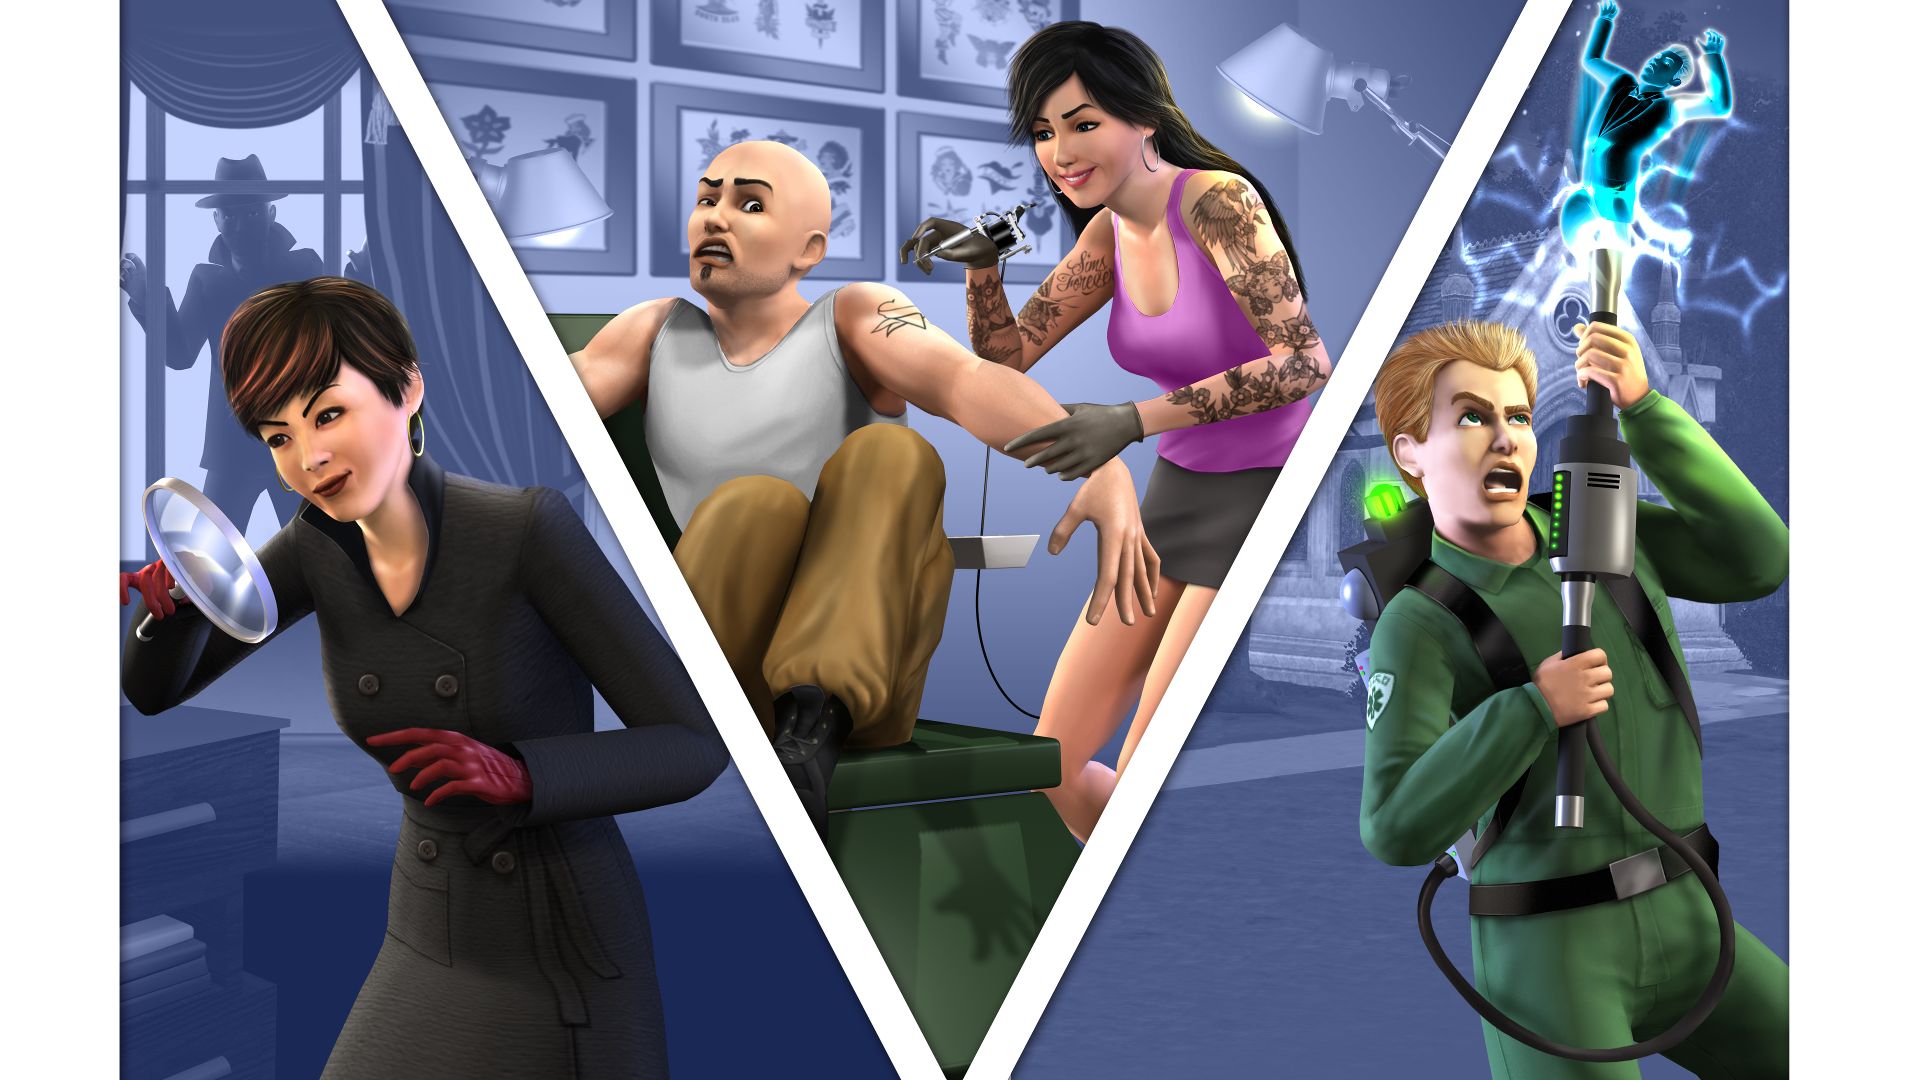 Sims 3 Mods